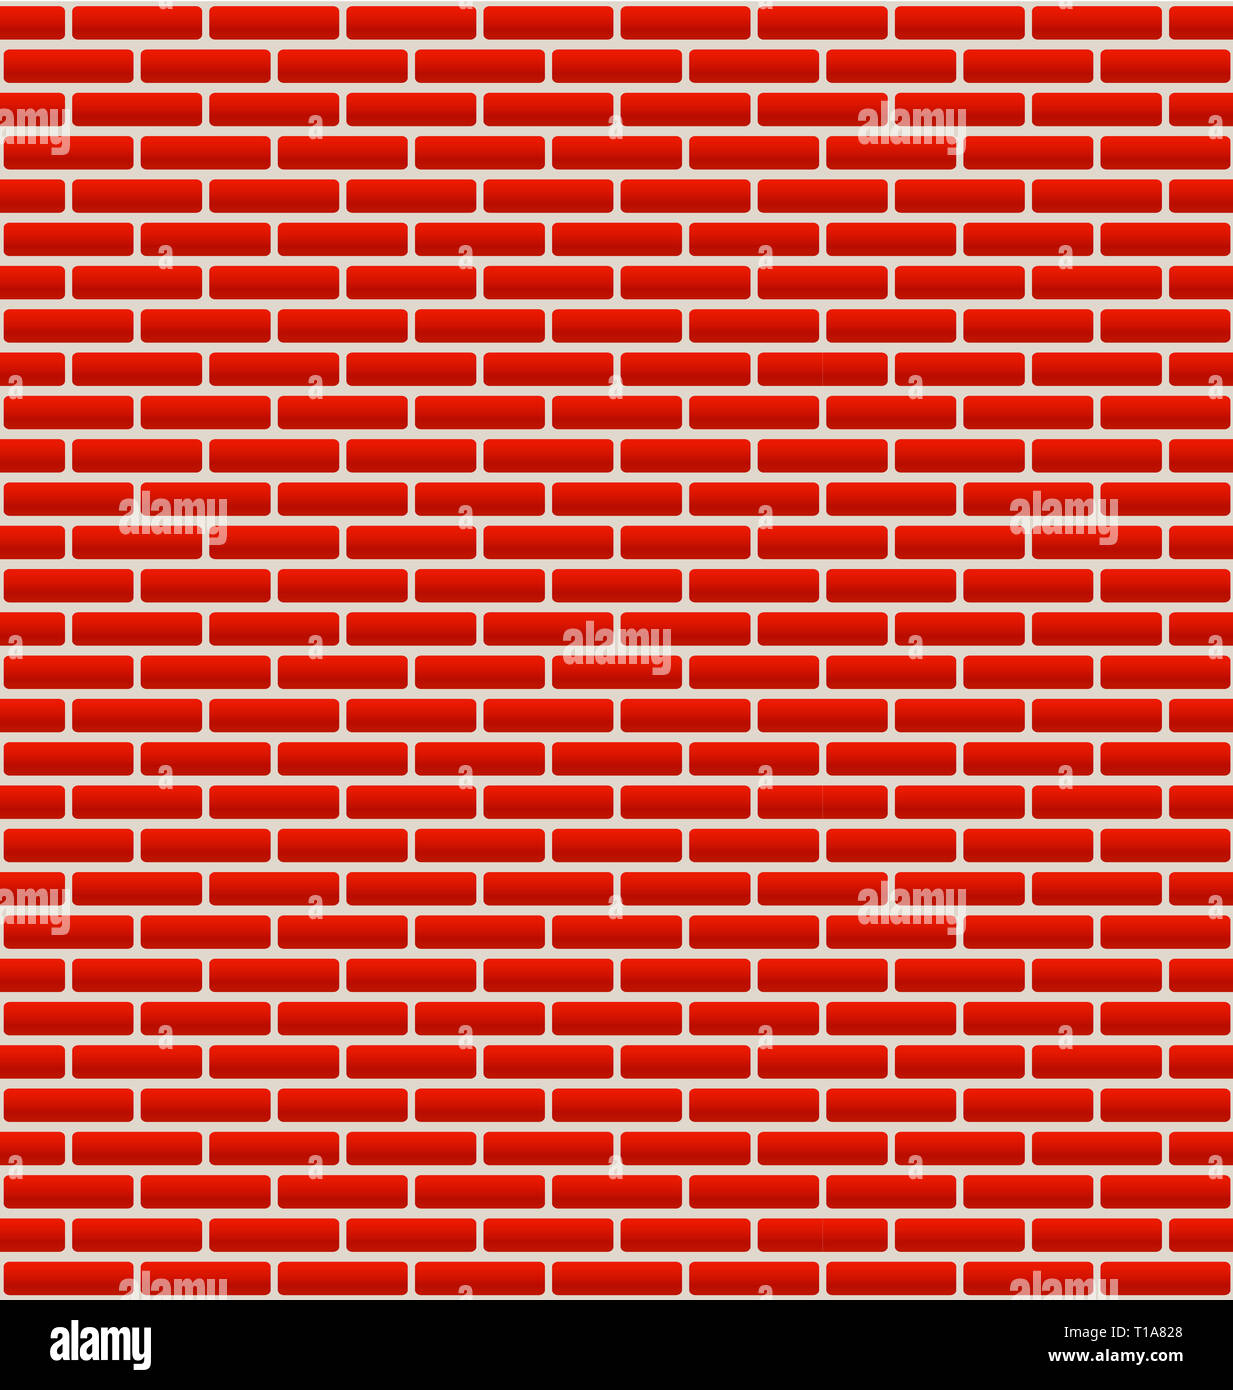 Brick Wall Texture with Small Bricks Stock Photo